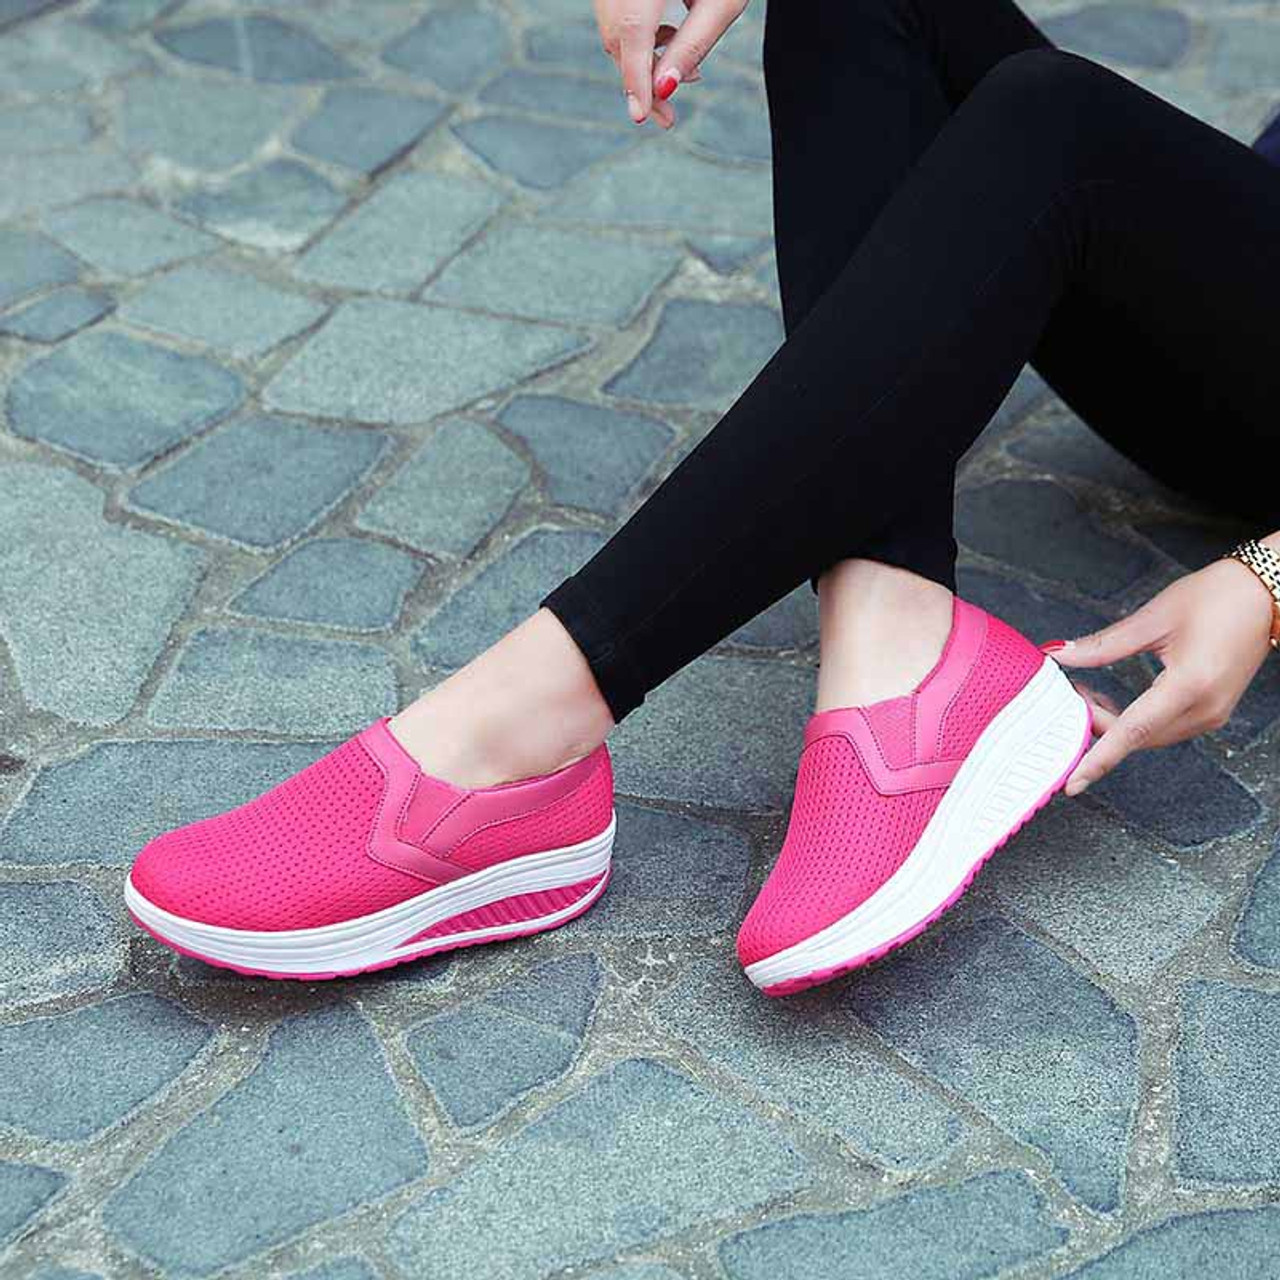 Rose red plain slip on rocker bottom shoe sneaker | Womens rocker shoes ...